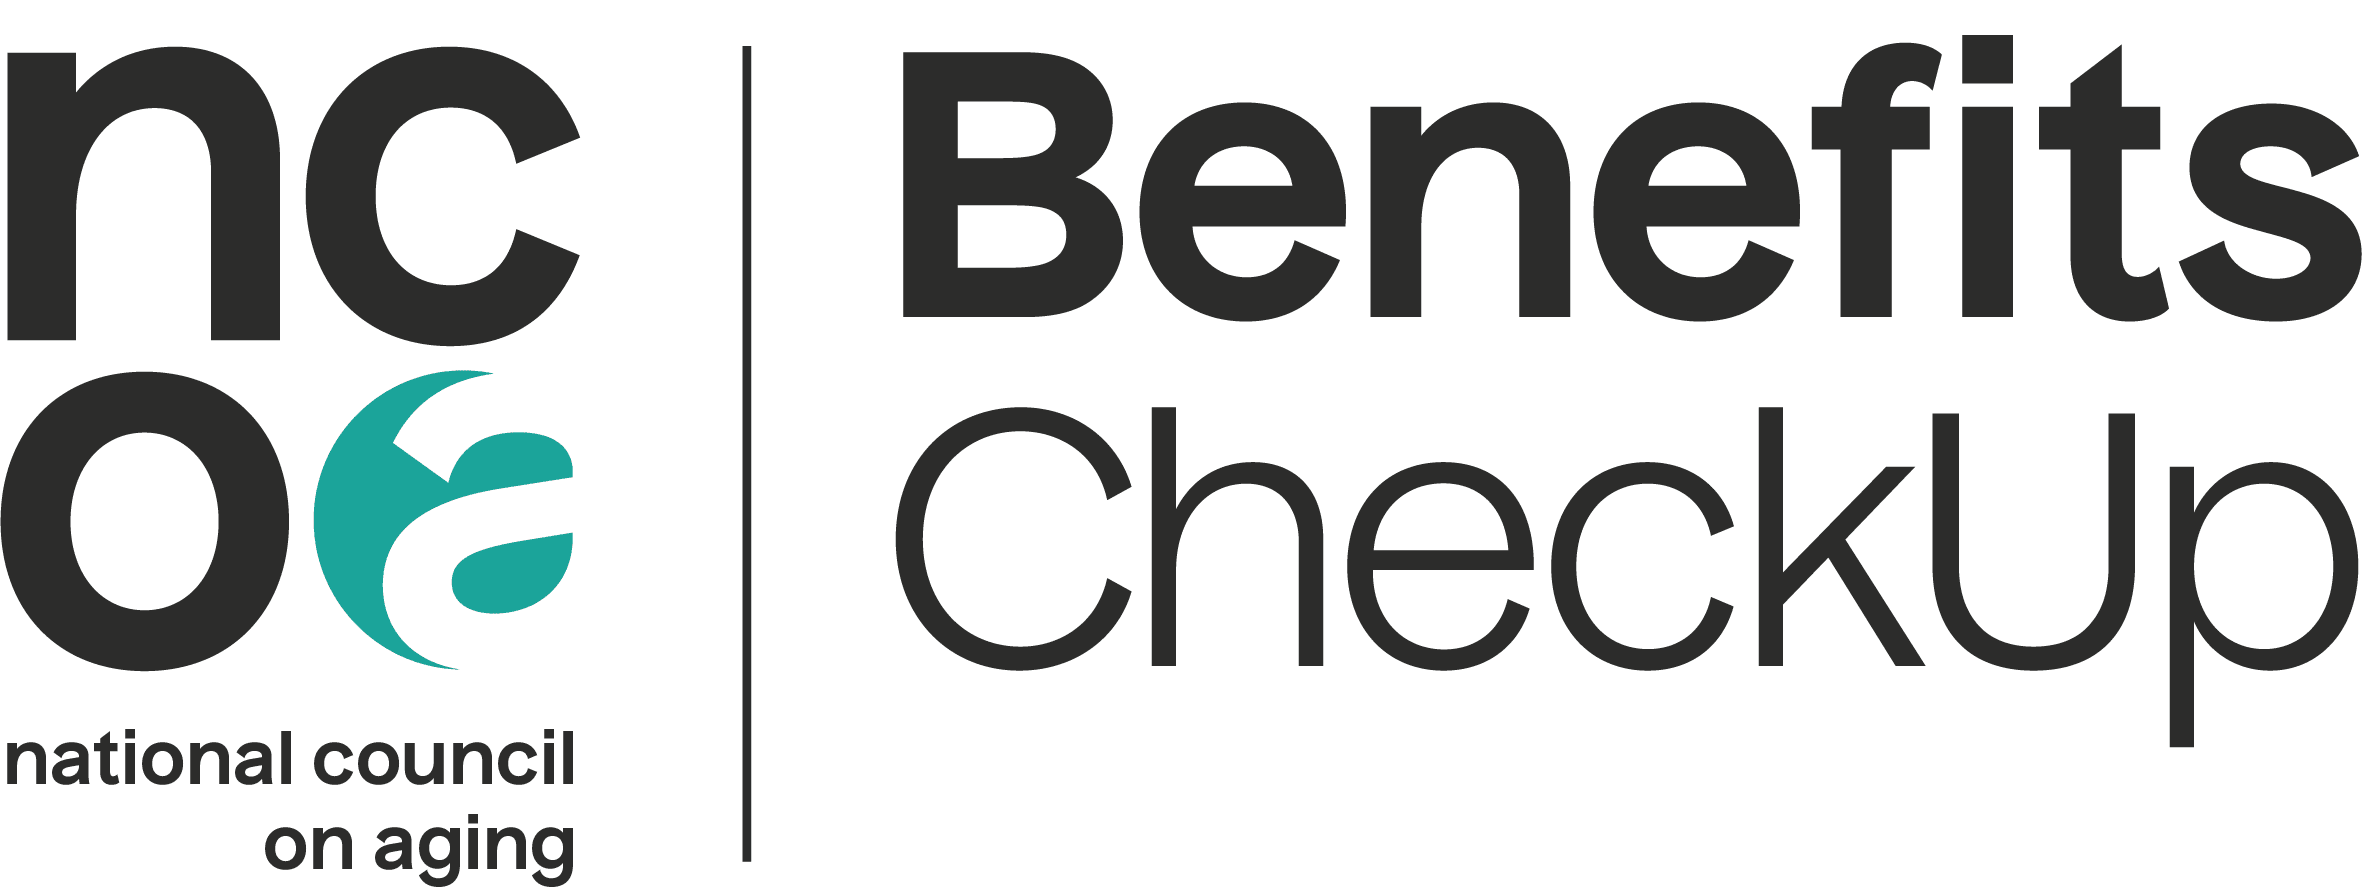 NCOA benefits checkup logo large size